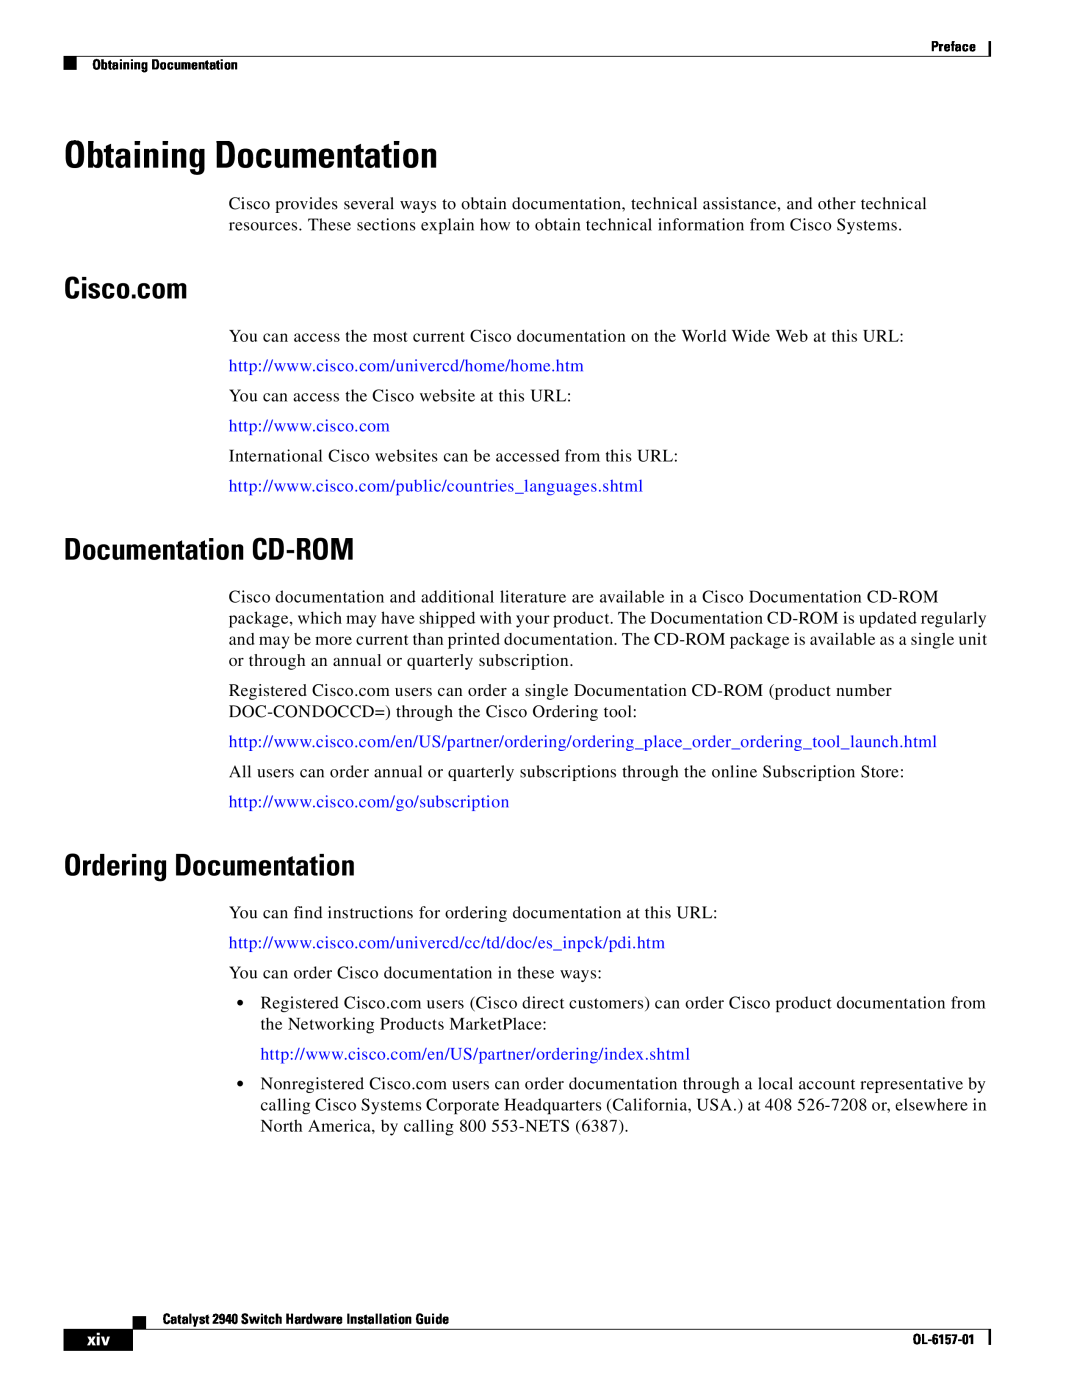 Cisco Systems OL-6157-01 manual Obtaining Documentation, Cisco.com, Documentation CD-ROM, Ordering Documentation 